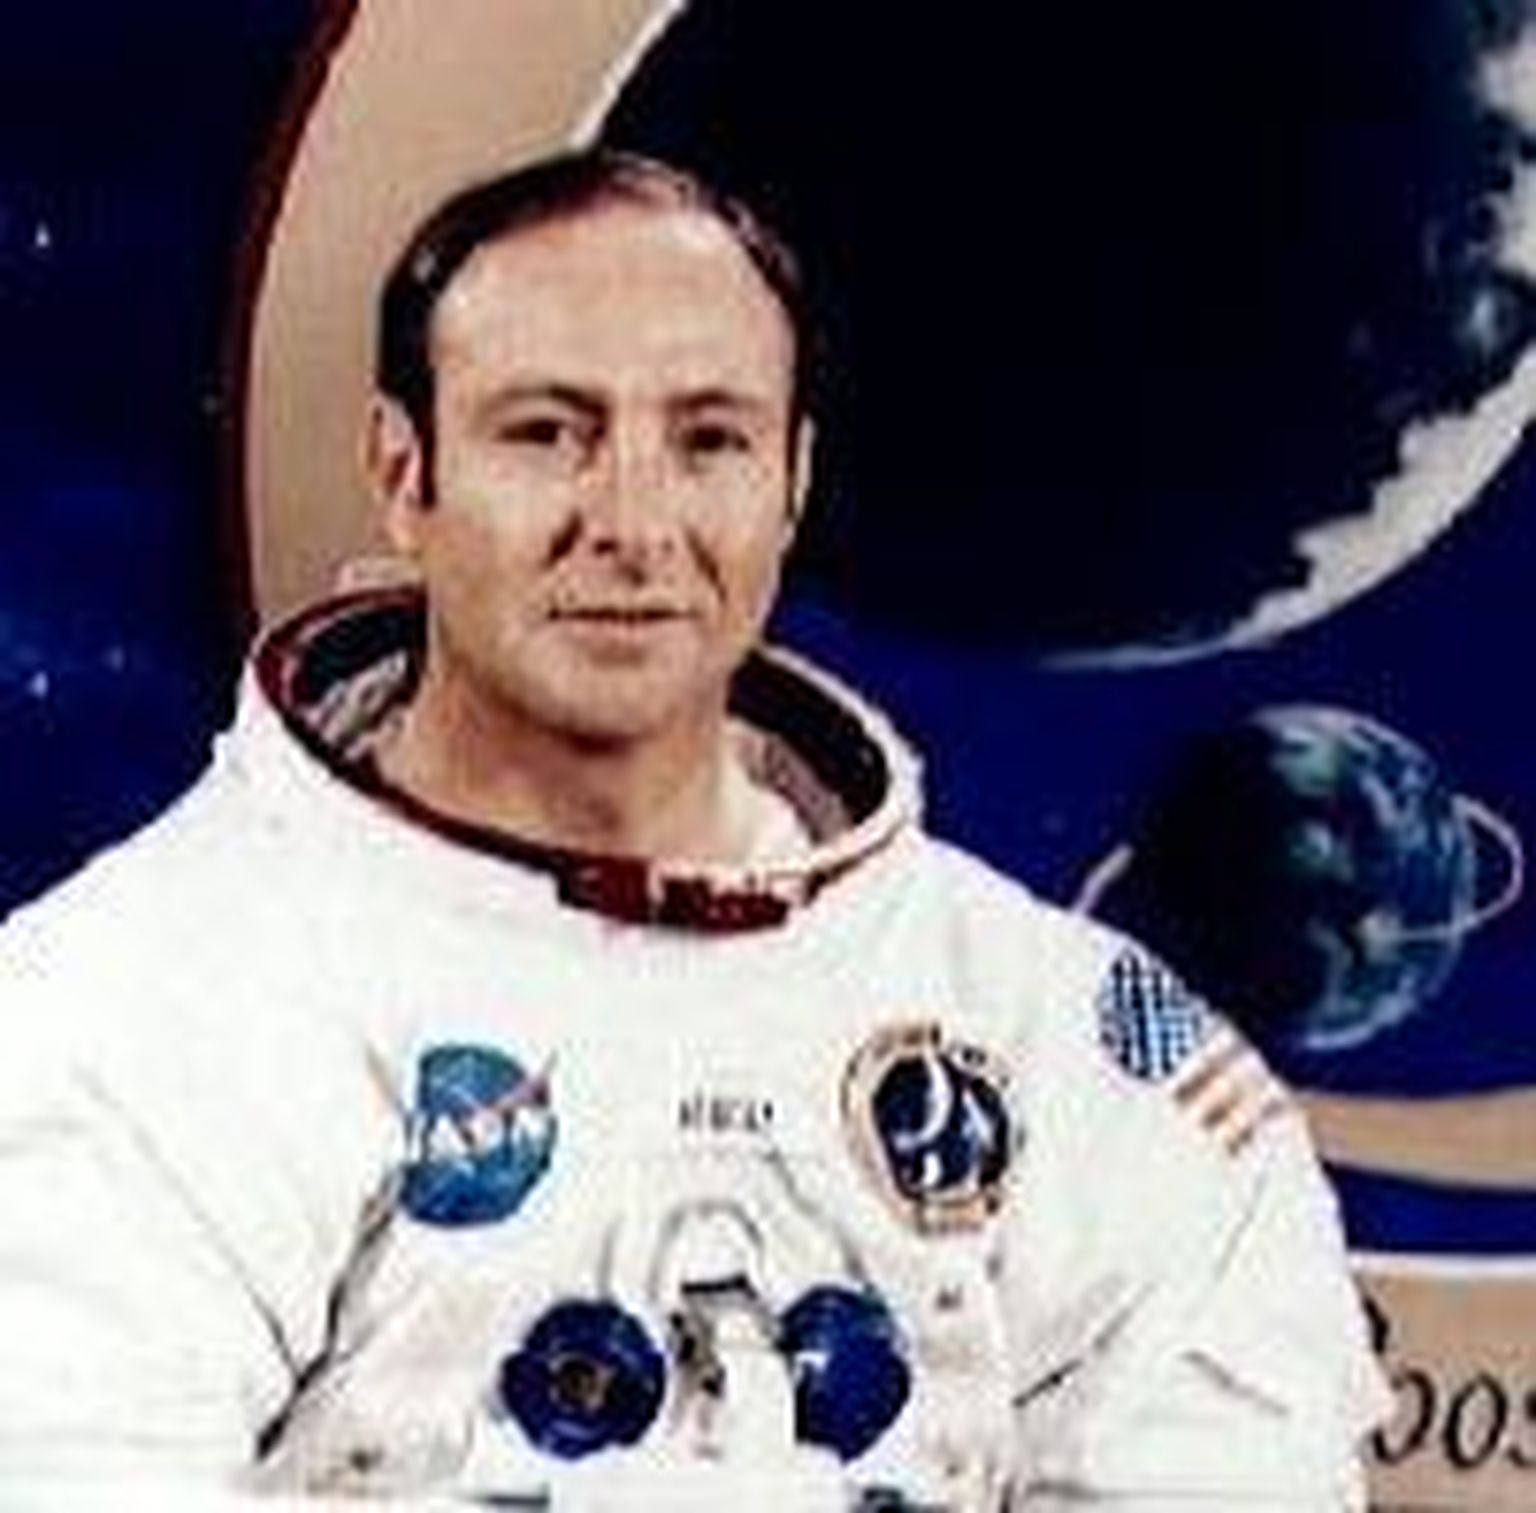 USA astronaut Edgar Mitchell